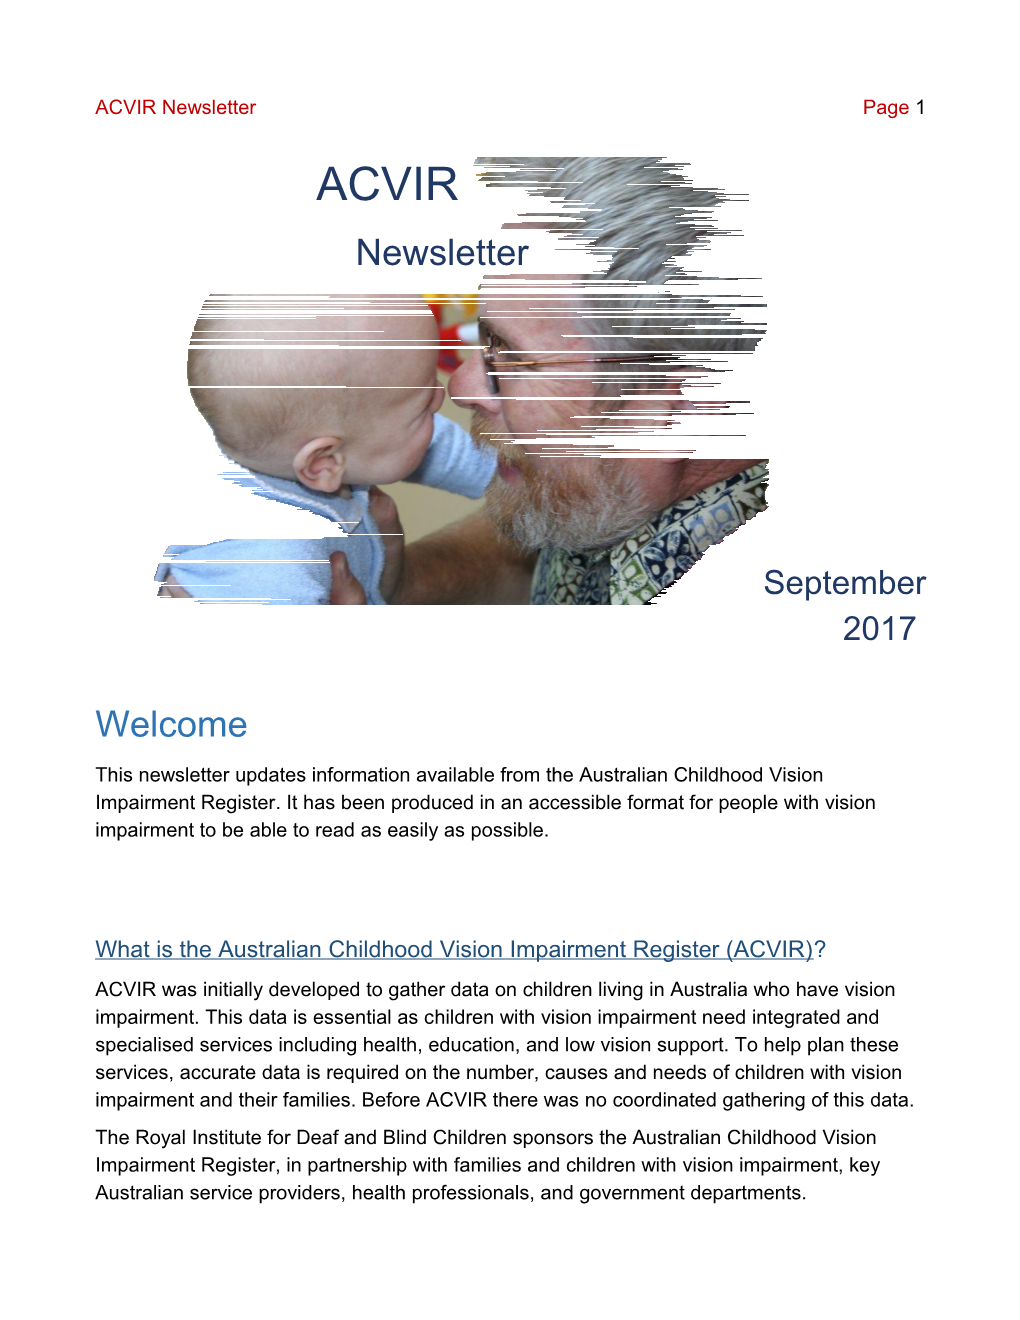 What Is the Australian Childhood Vision Impairment Register (ACVIR)?